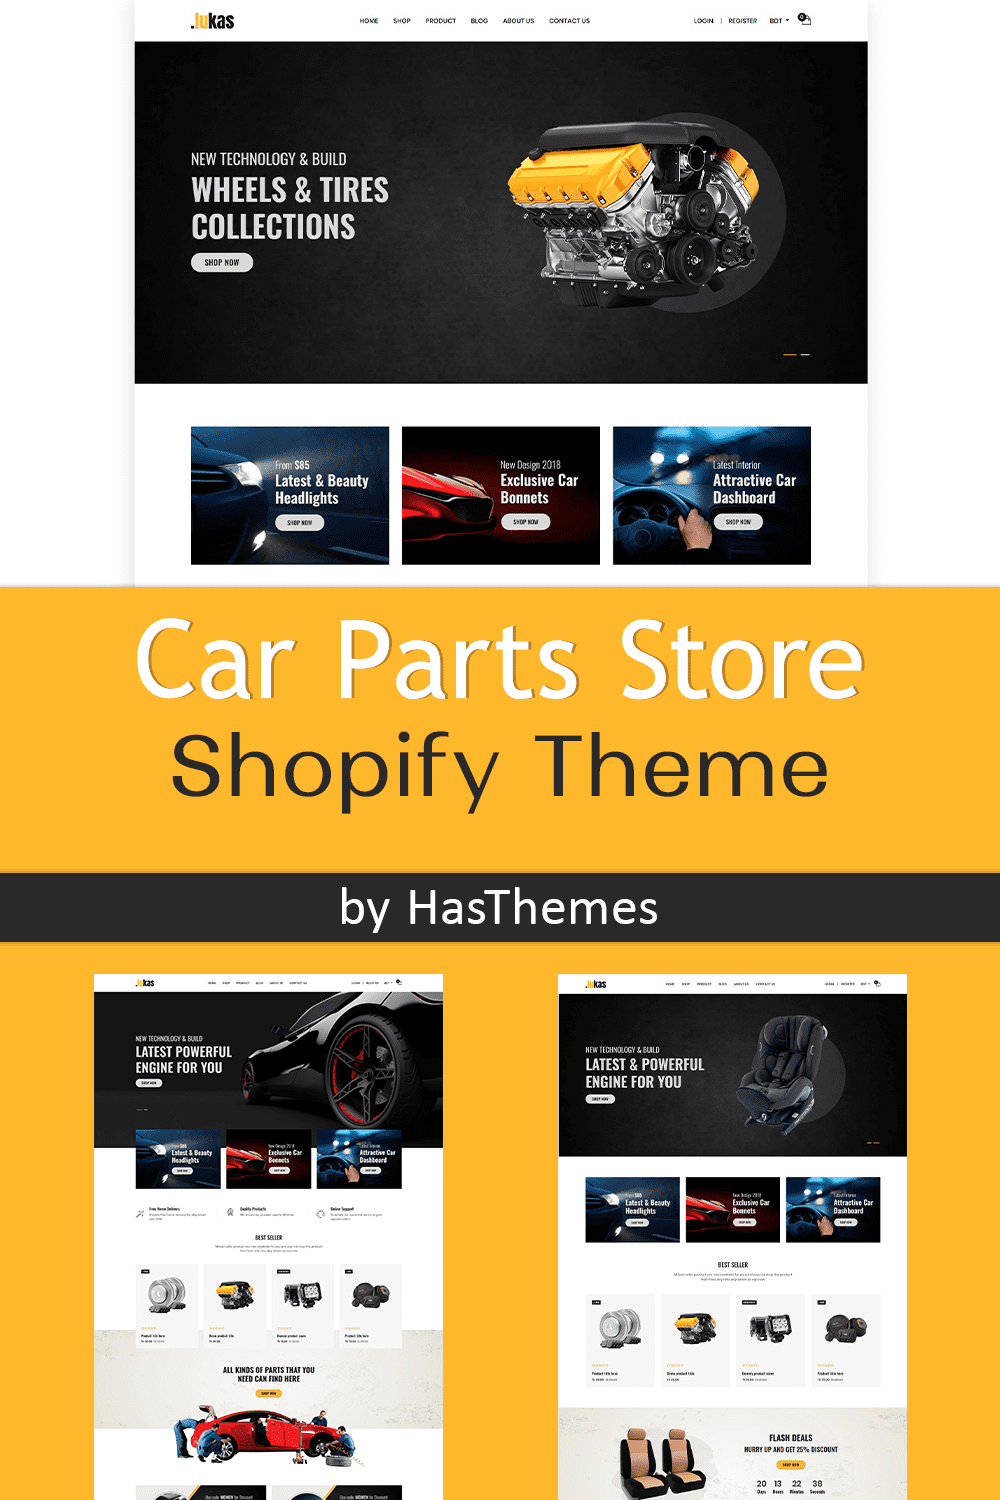 Car Parts Store Shopify Theme - pinterest image preview.